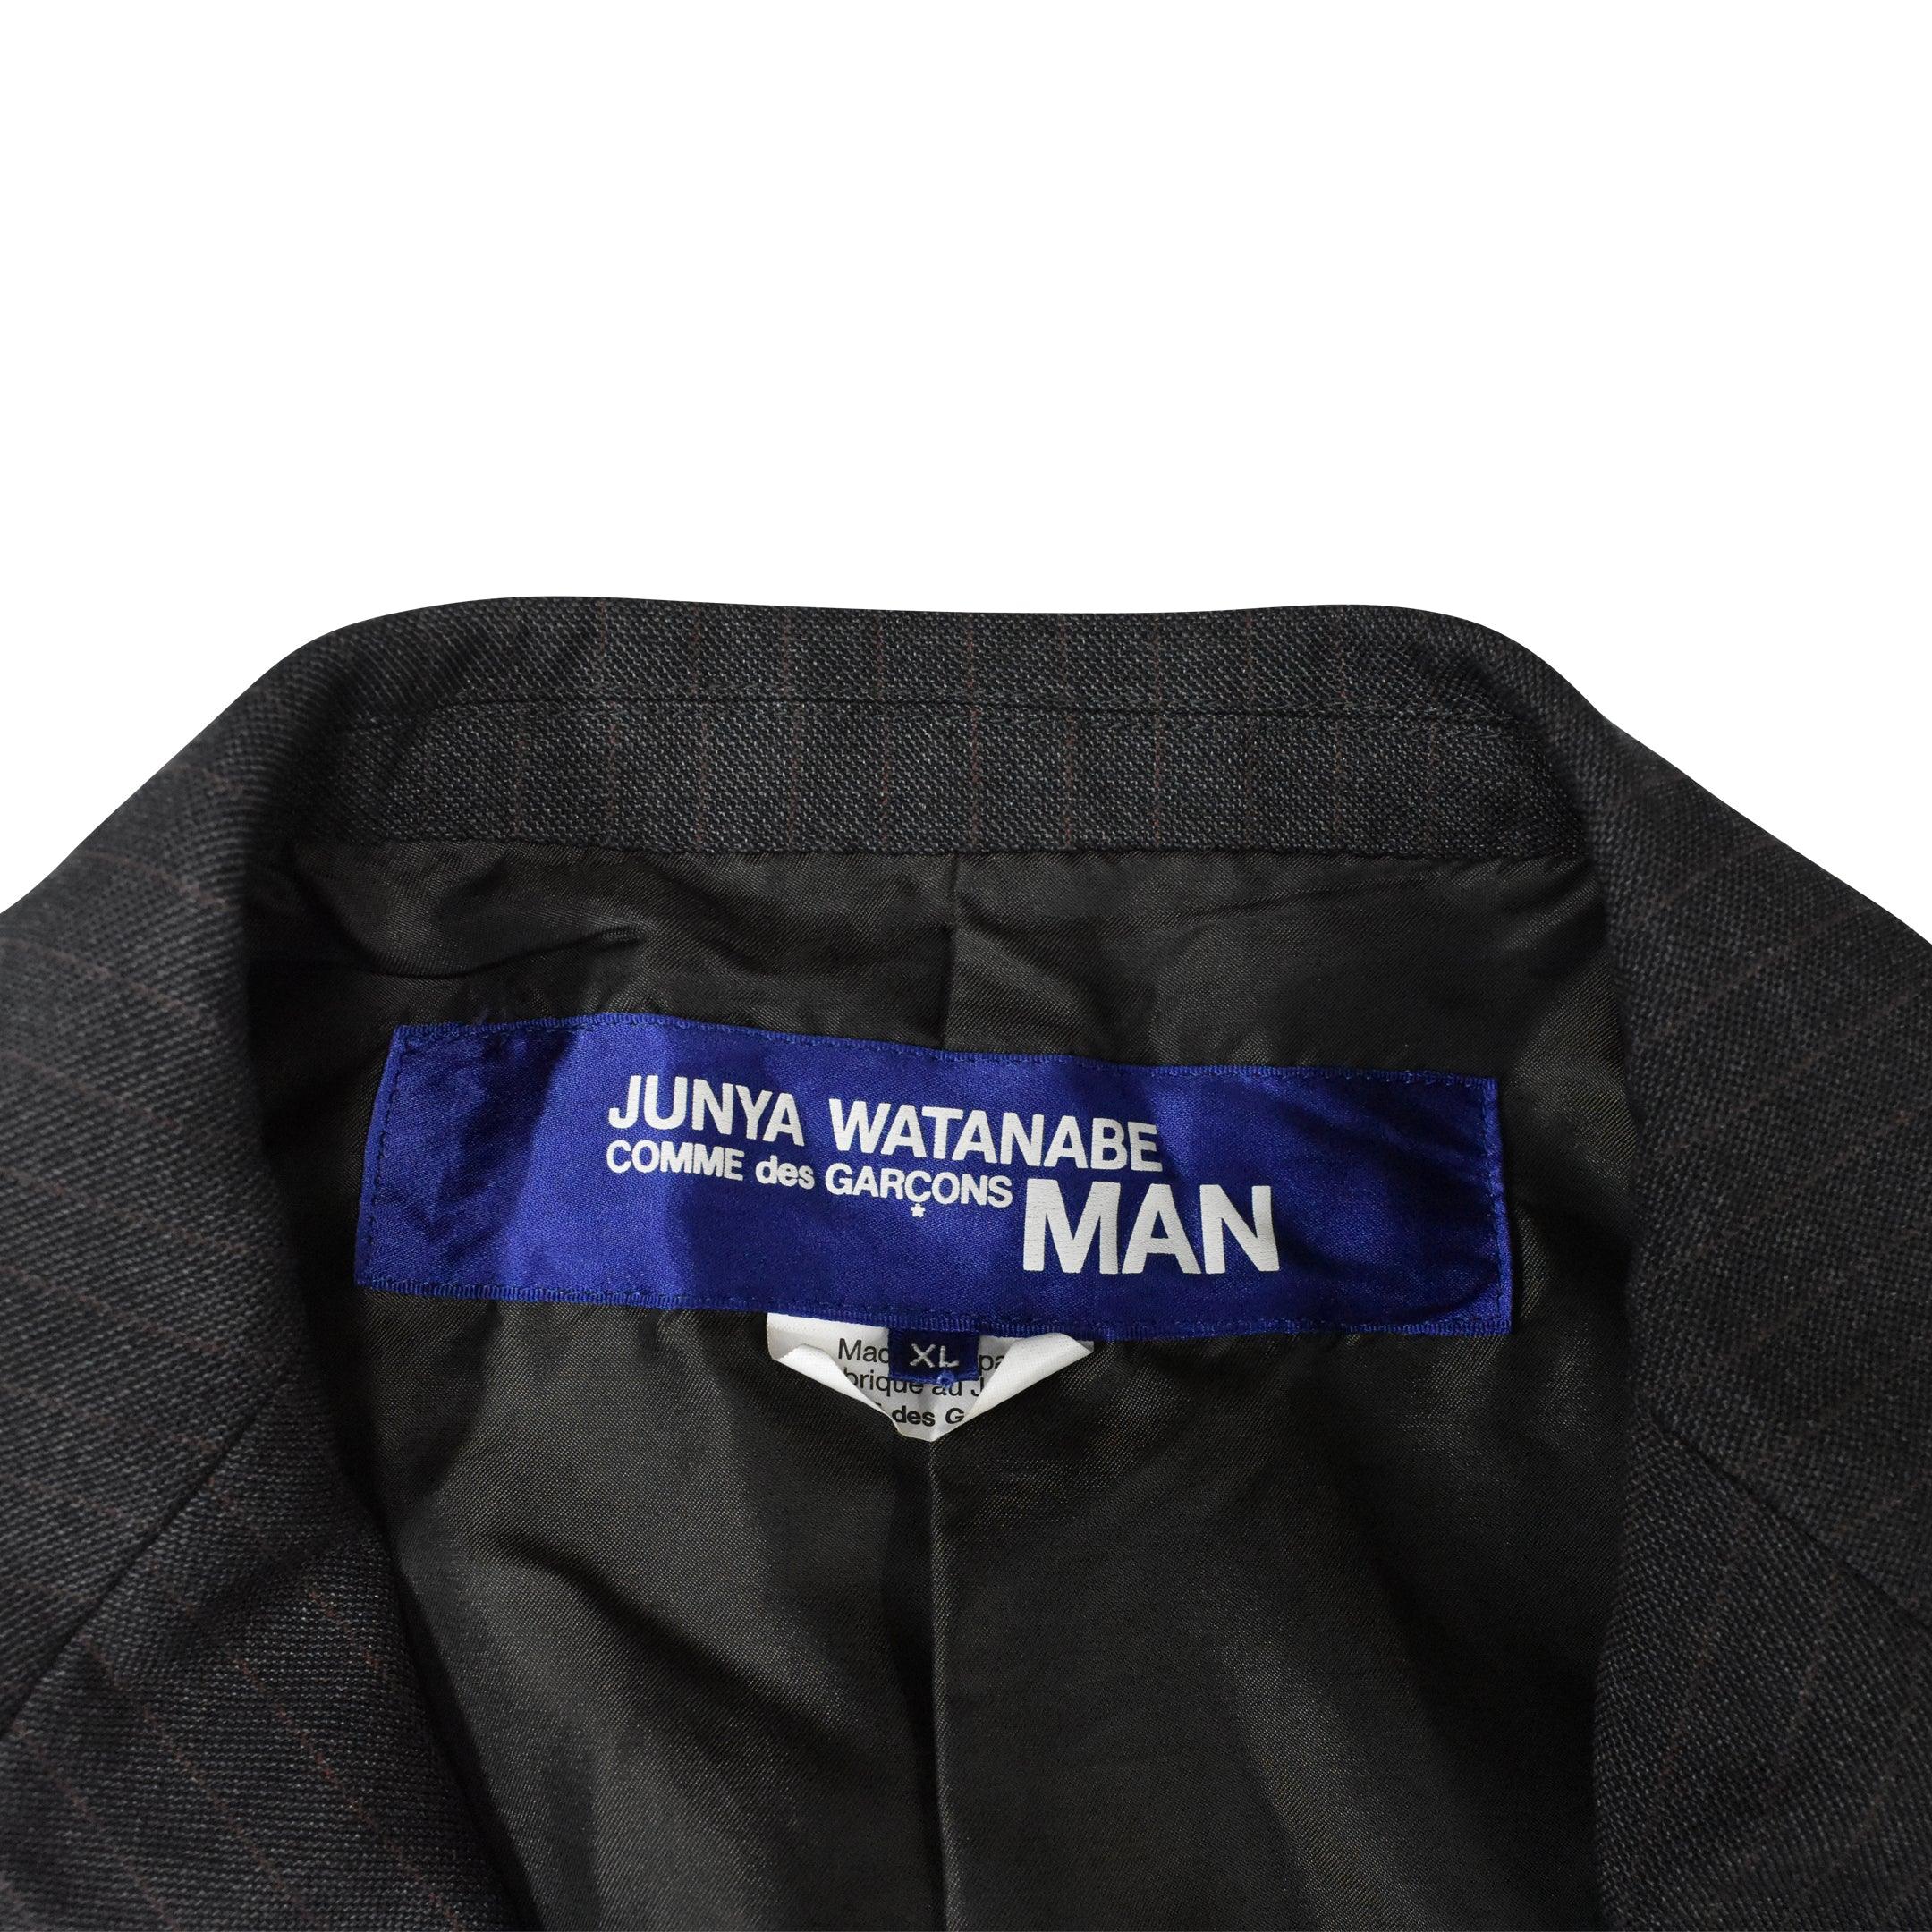 Junya Watanabe Comme des Garcons Man Blazer - Men's XL - Fashionably Yours